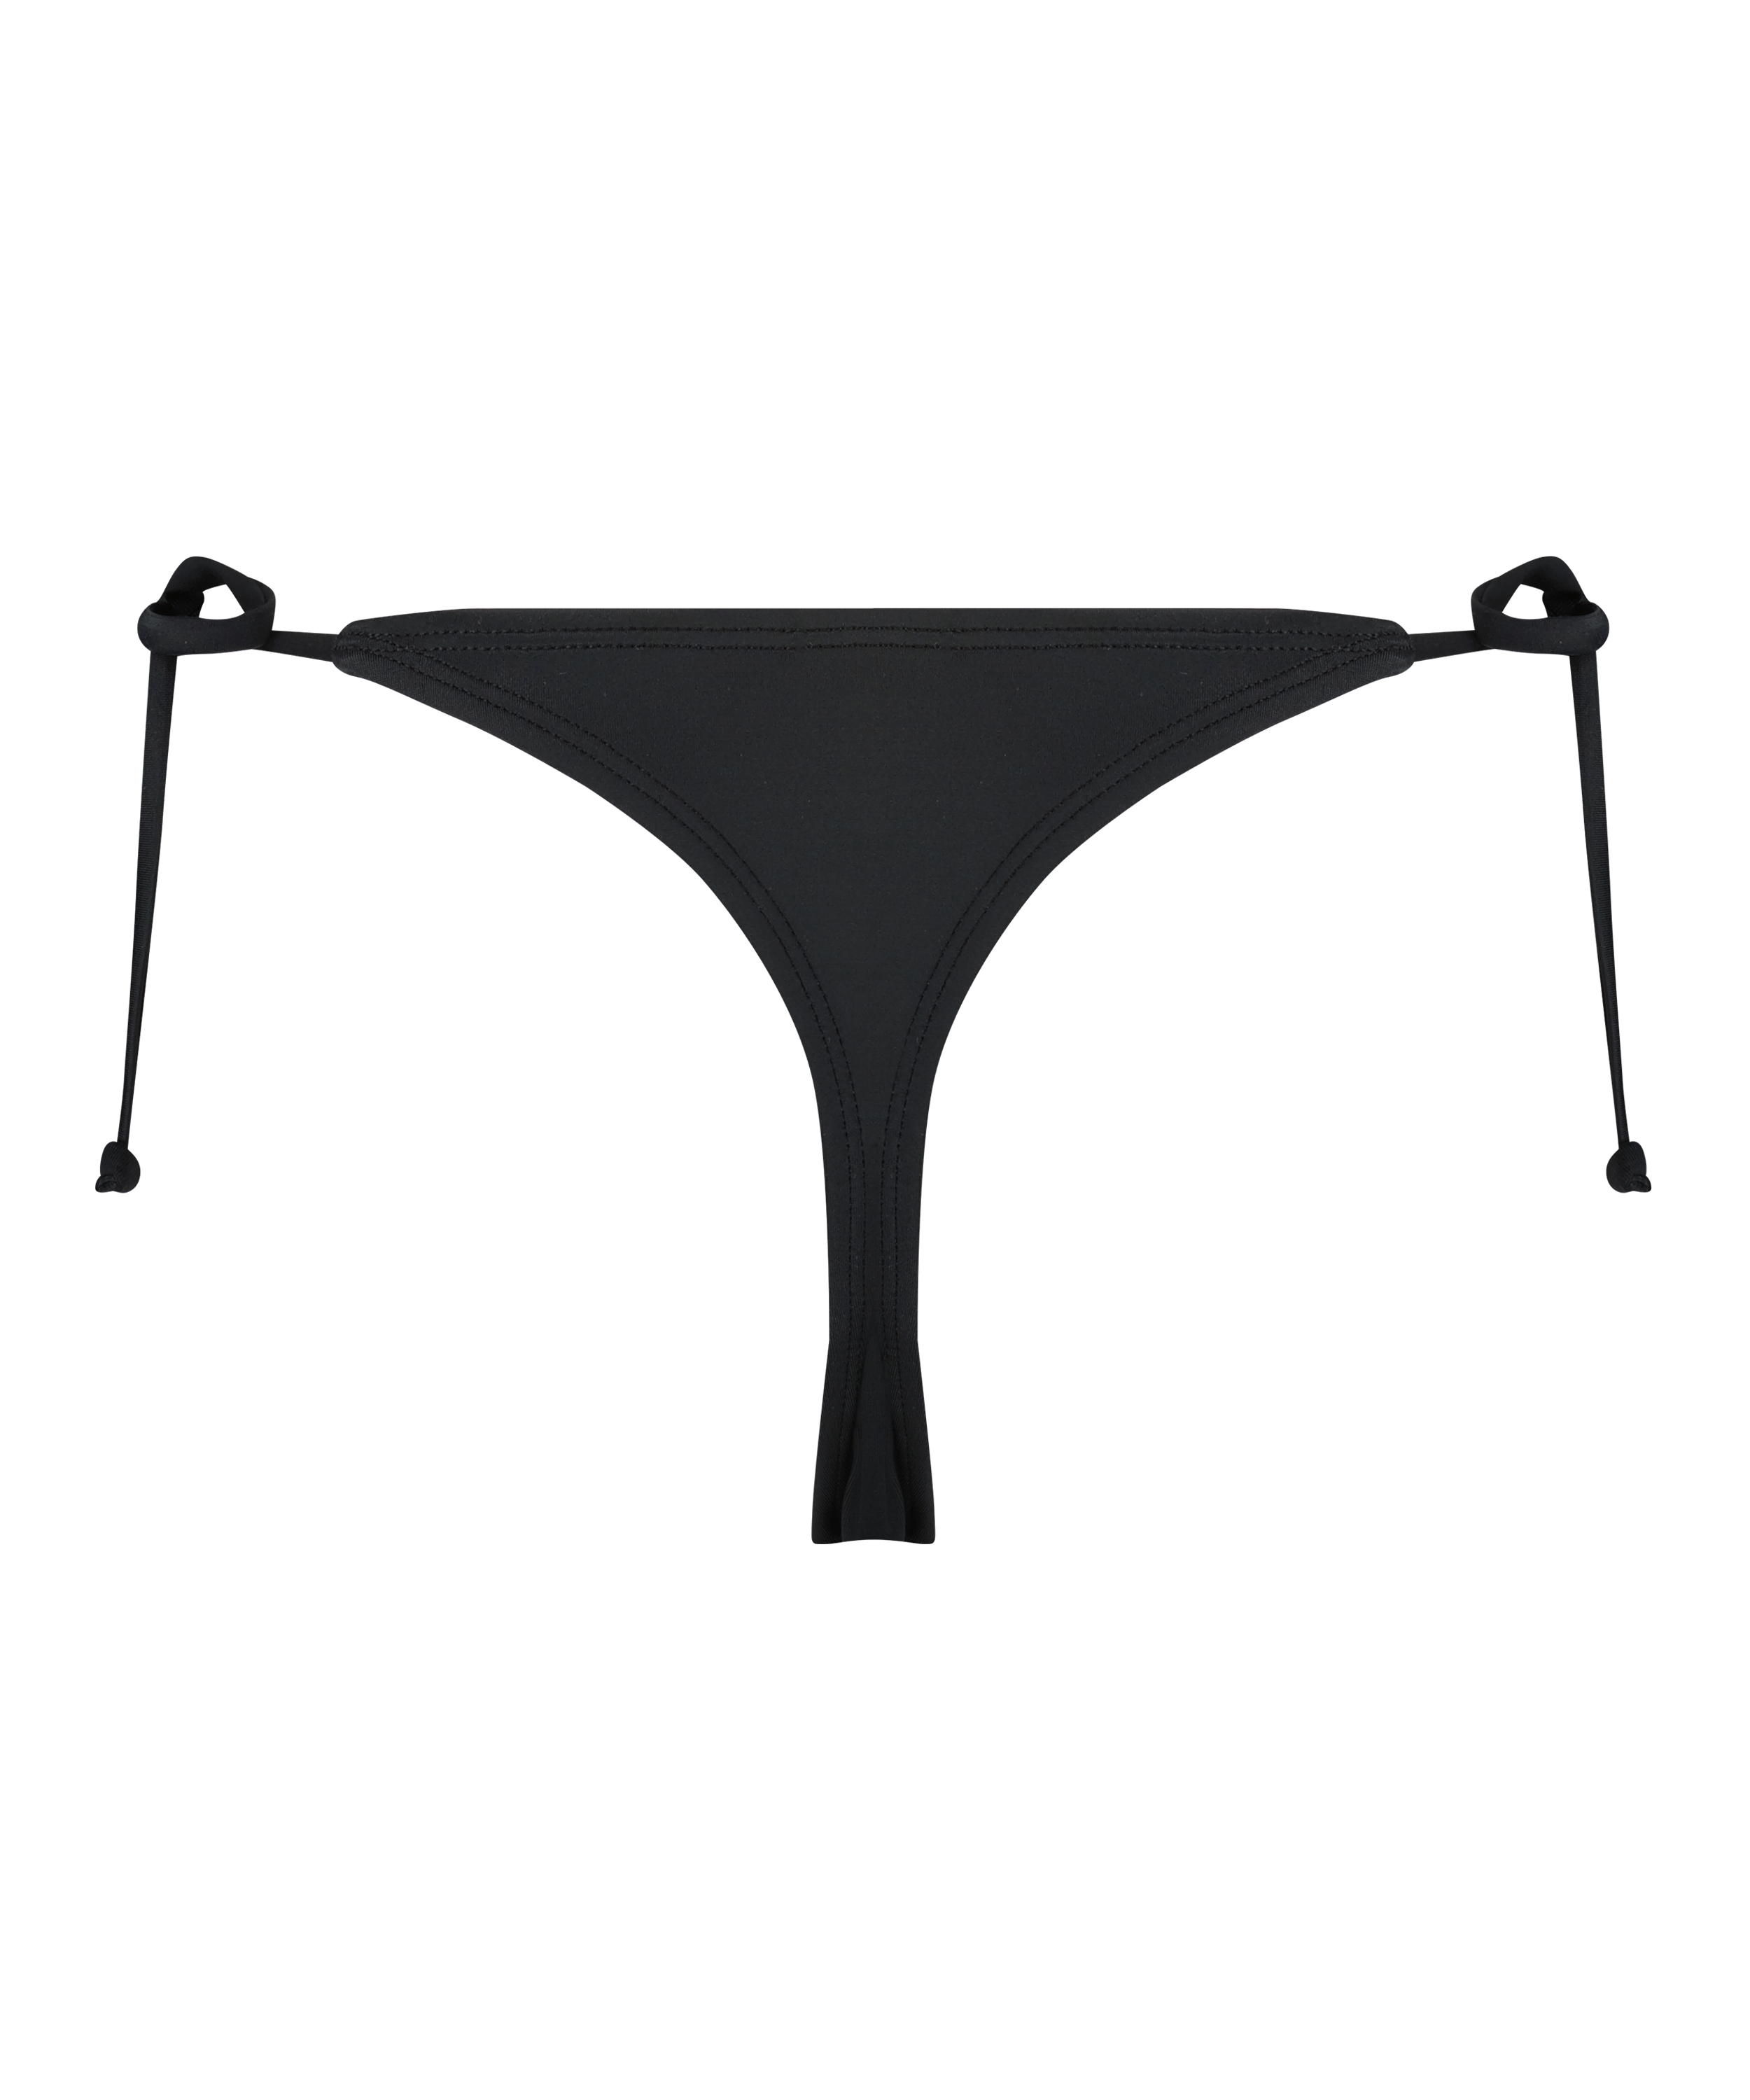 Luxe string bikini shorts, Black, main